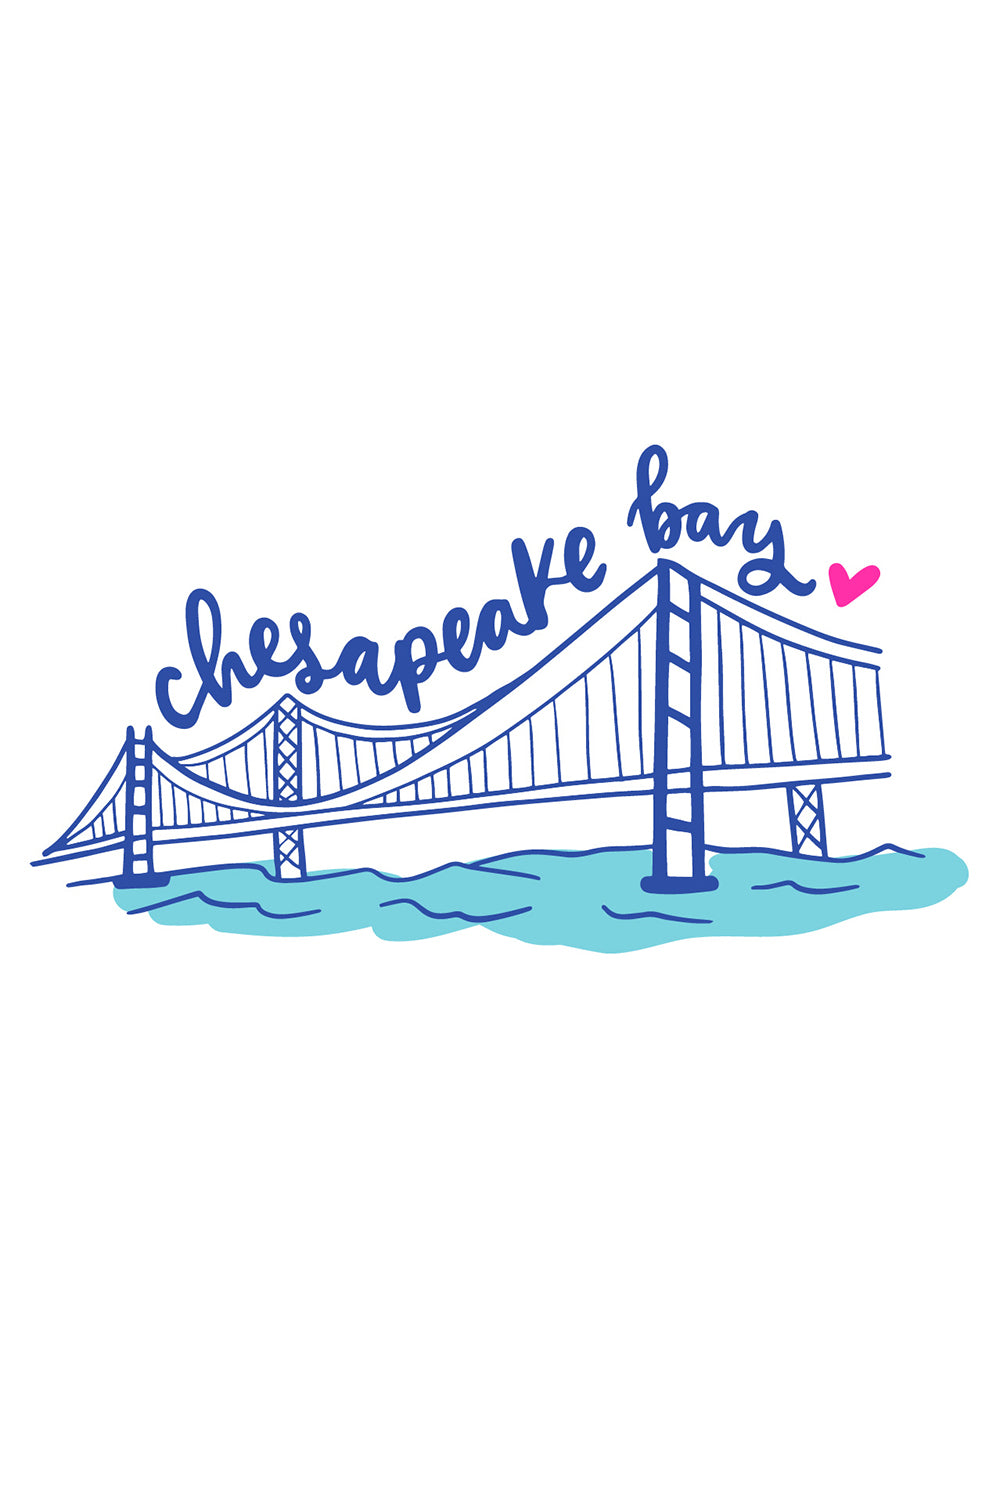 Trendy Sticker - Chesapeake Bay Bridge